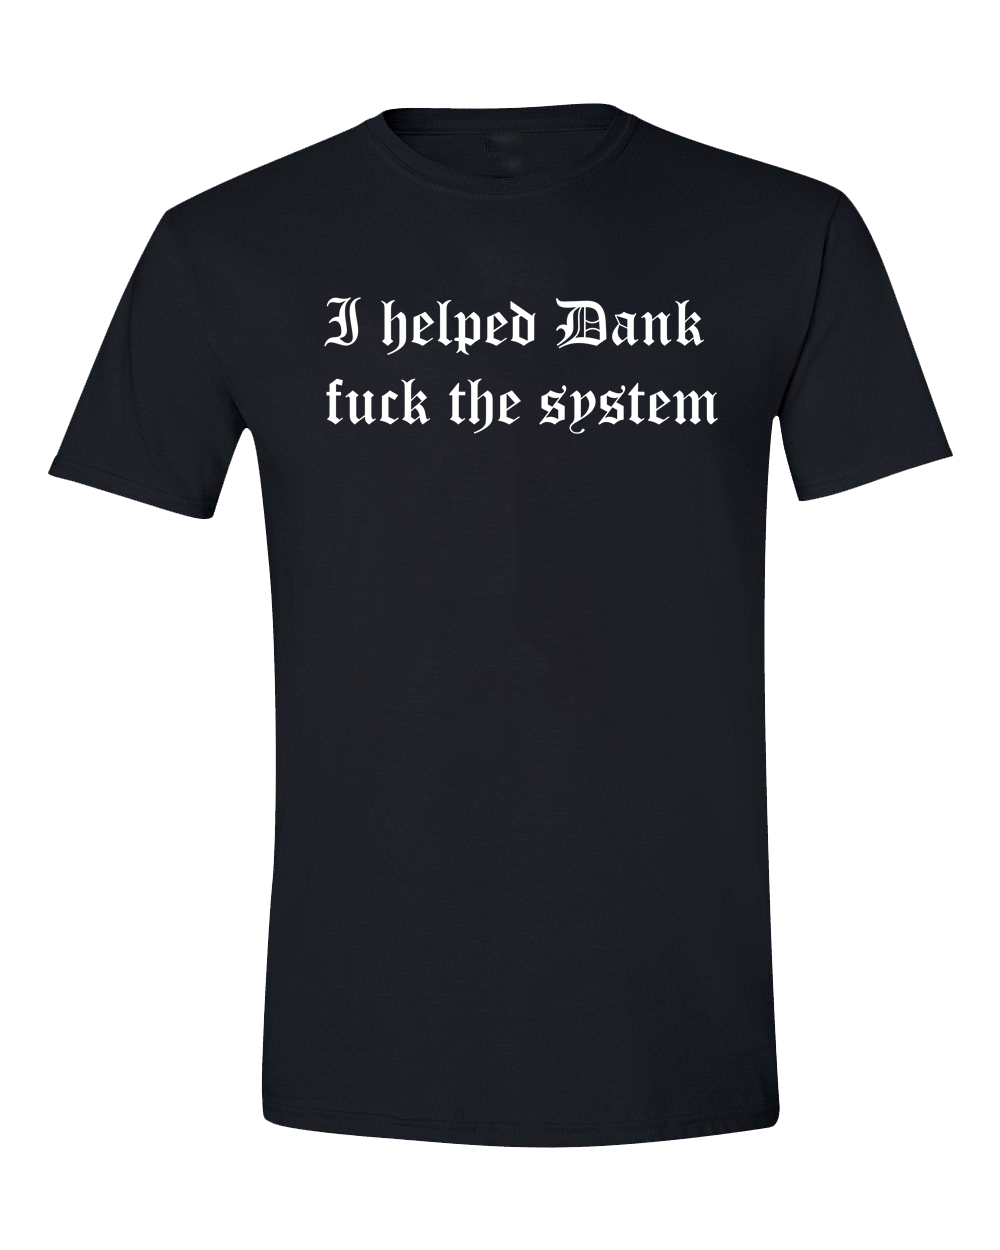 Danktattoomeme “Fuck The System” Unisex T-Shirt